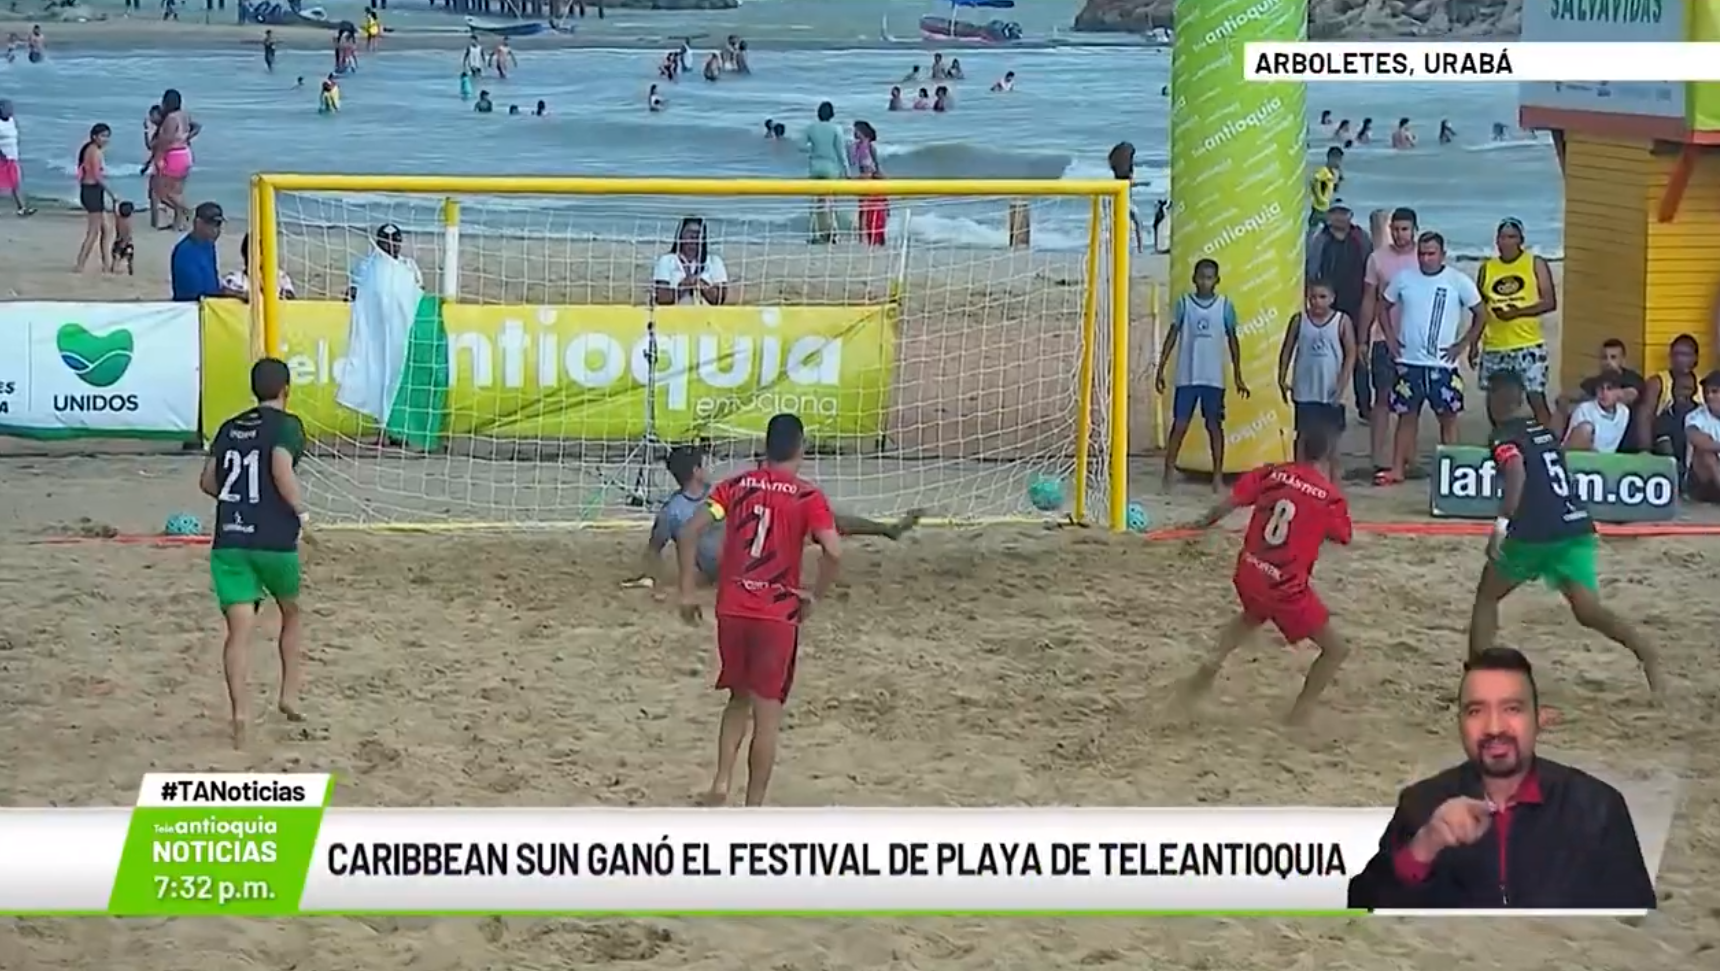 Caribbean Sun ganó el Festival de Playa de Teleantioquia